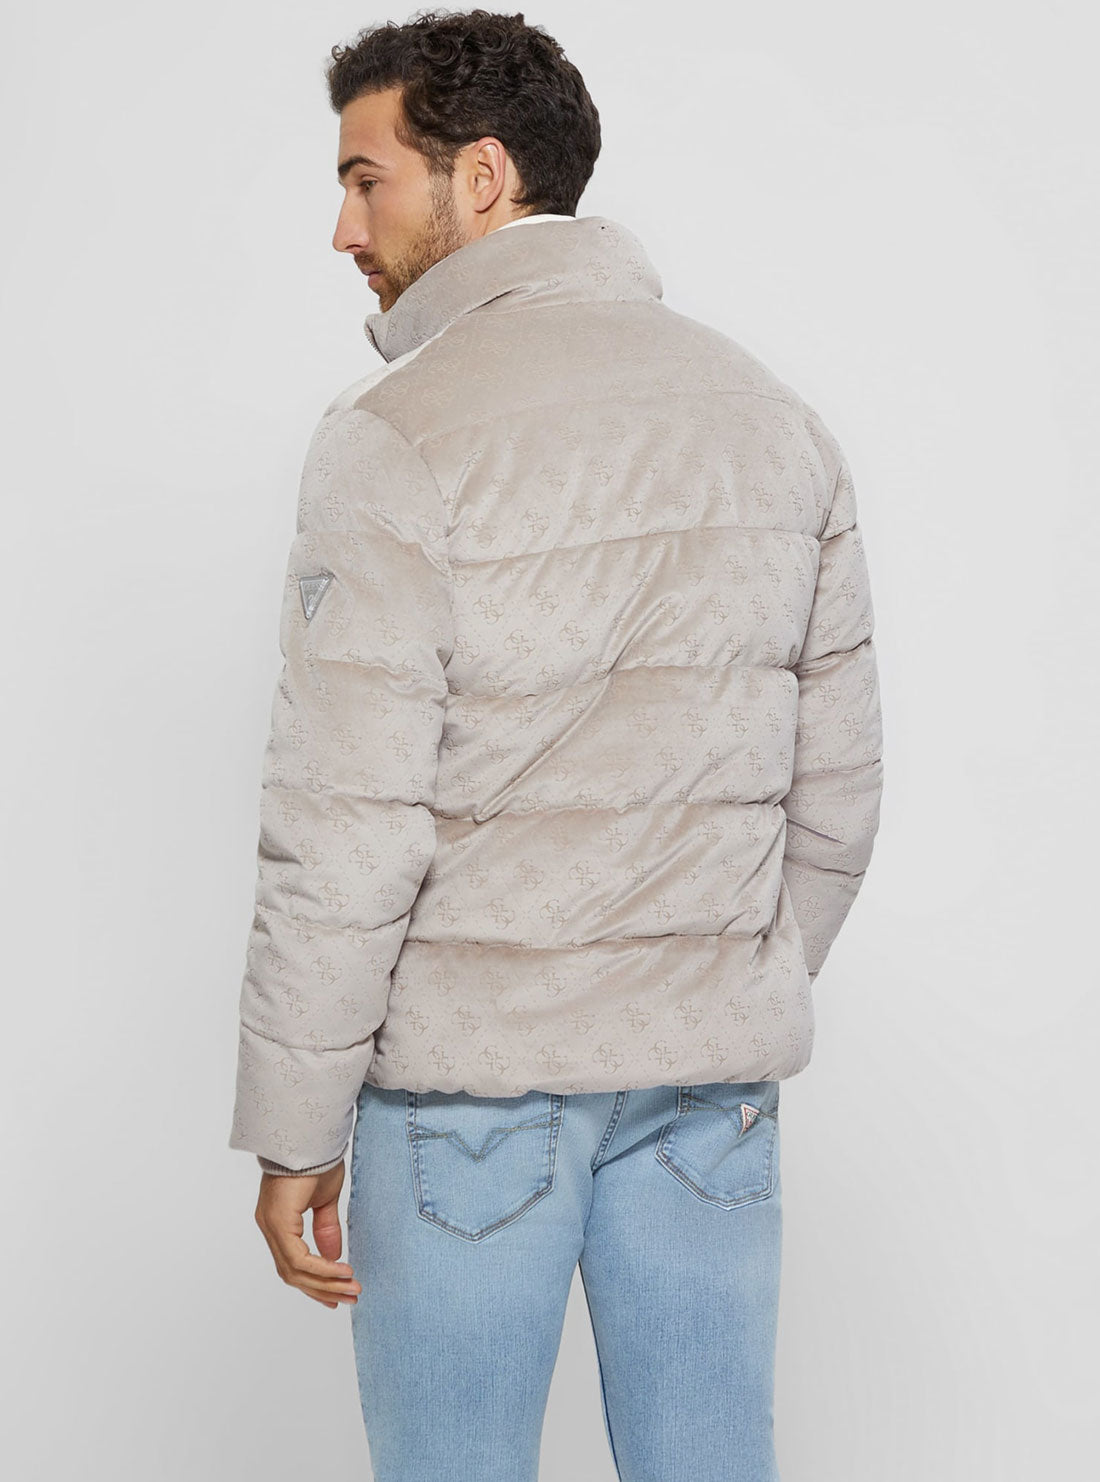 Stone Grey Logo Puffer Jacket | GUESS Men's Apparel | back view